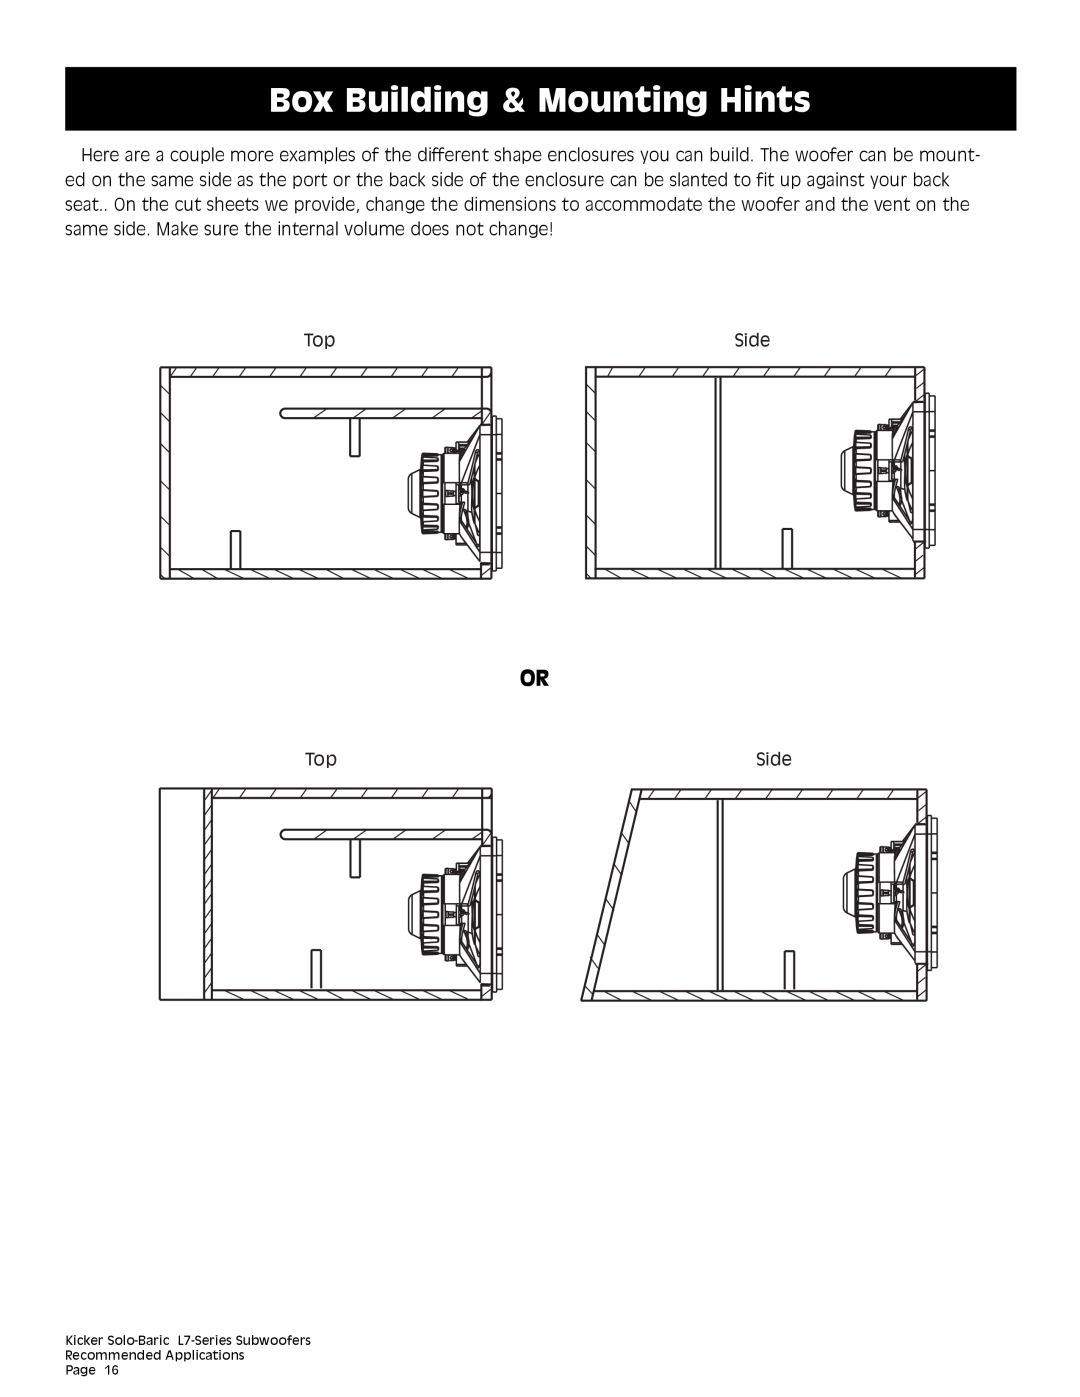 Kicker L7 technical manual Box Building & Mounting Hints, Side 